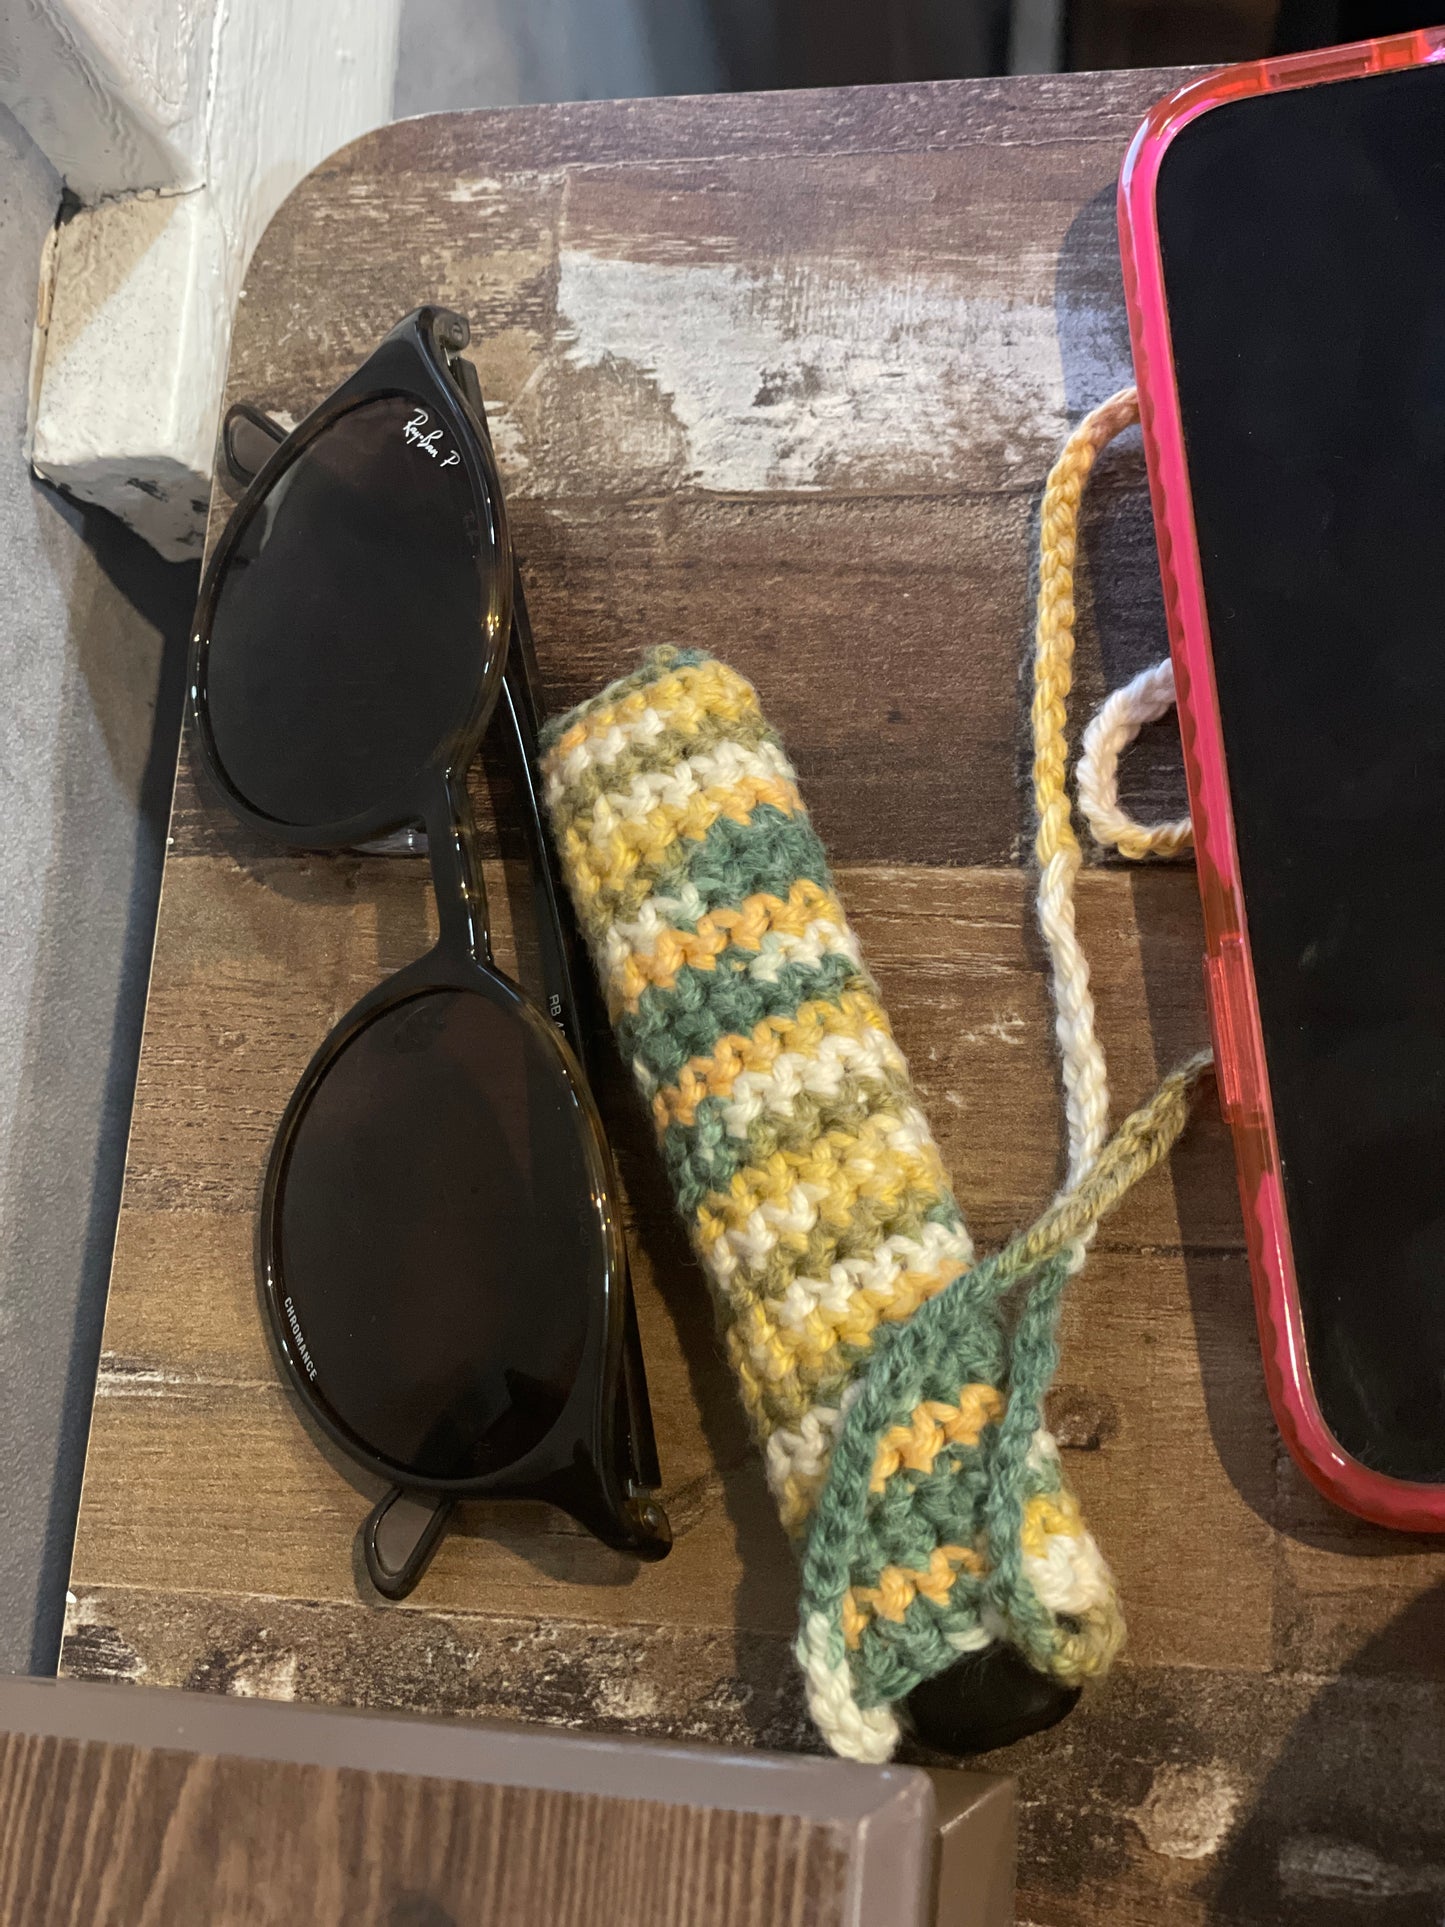 Crochet Accessories|Melbourne handmade|Vape holder